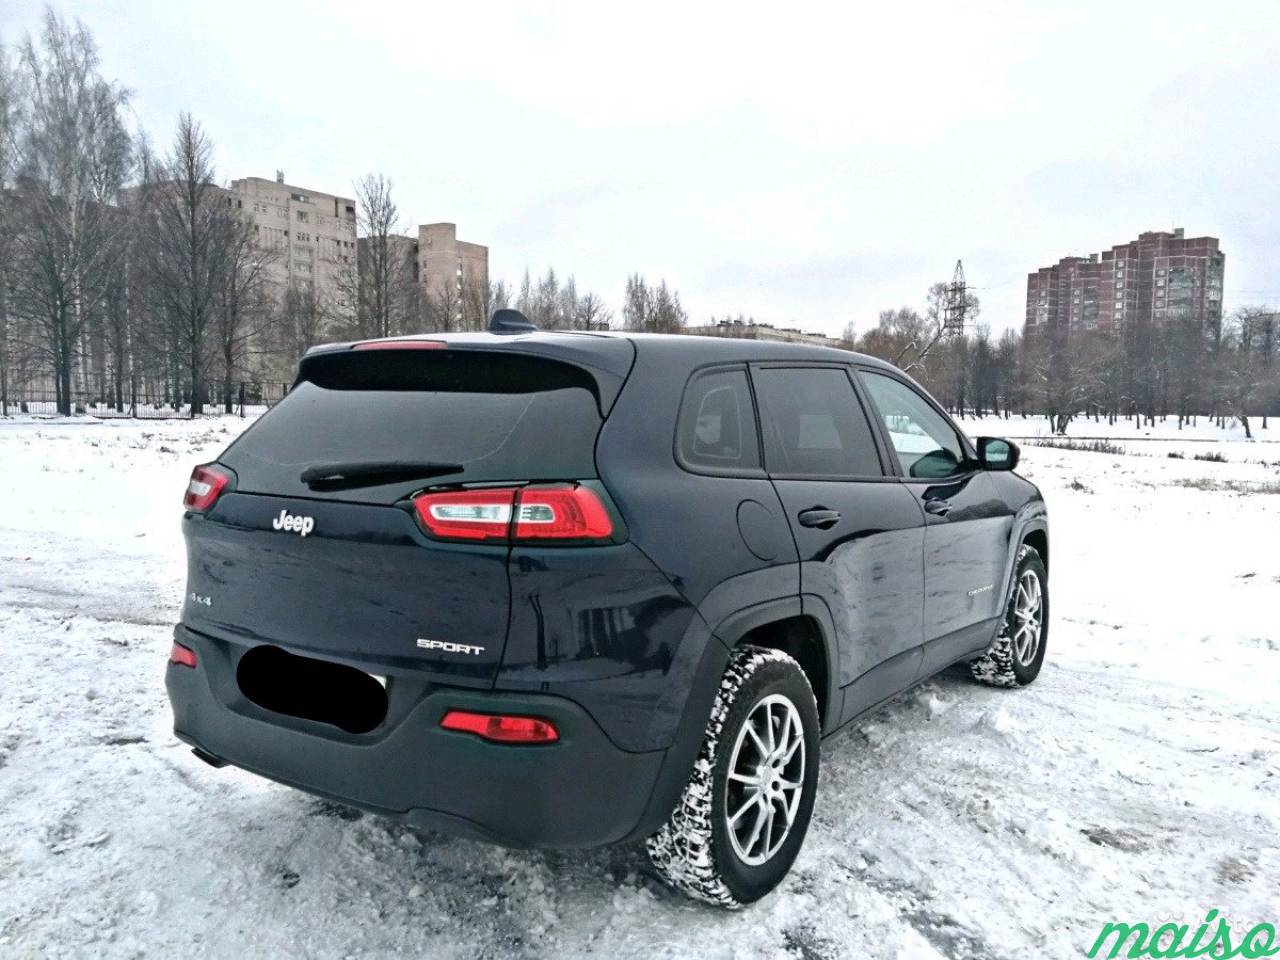 Jeep Cherokee 2.4 AT, 2014, универсал в Санкт-Петербурге. Фото 6